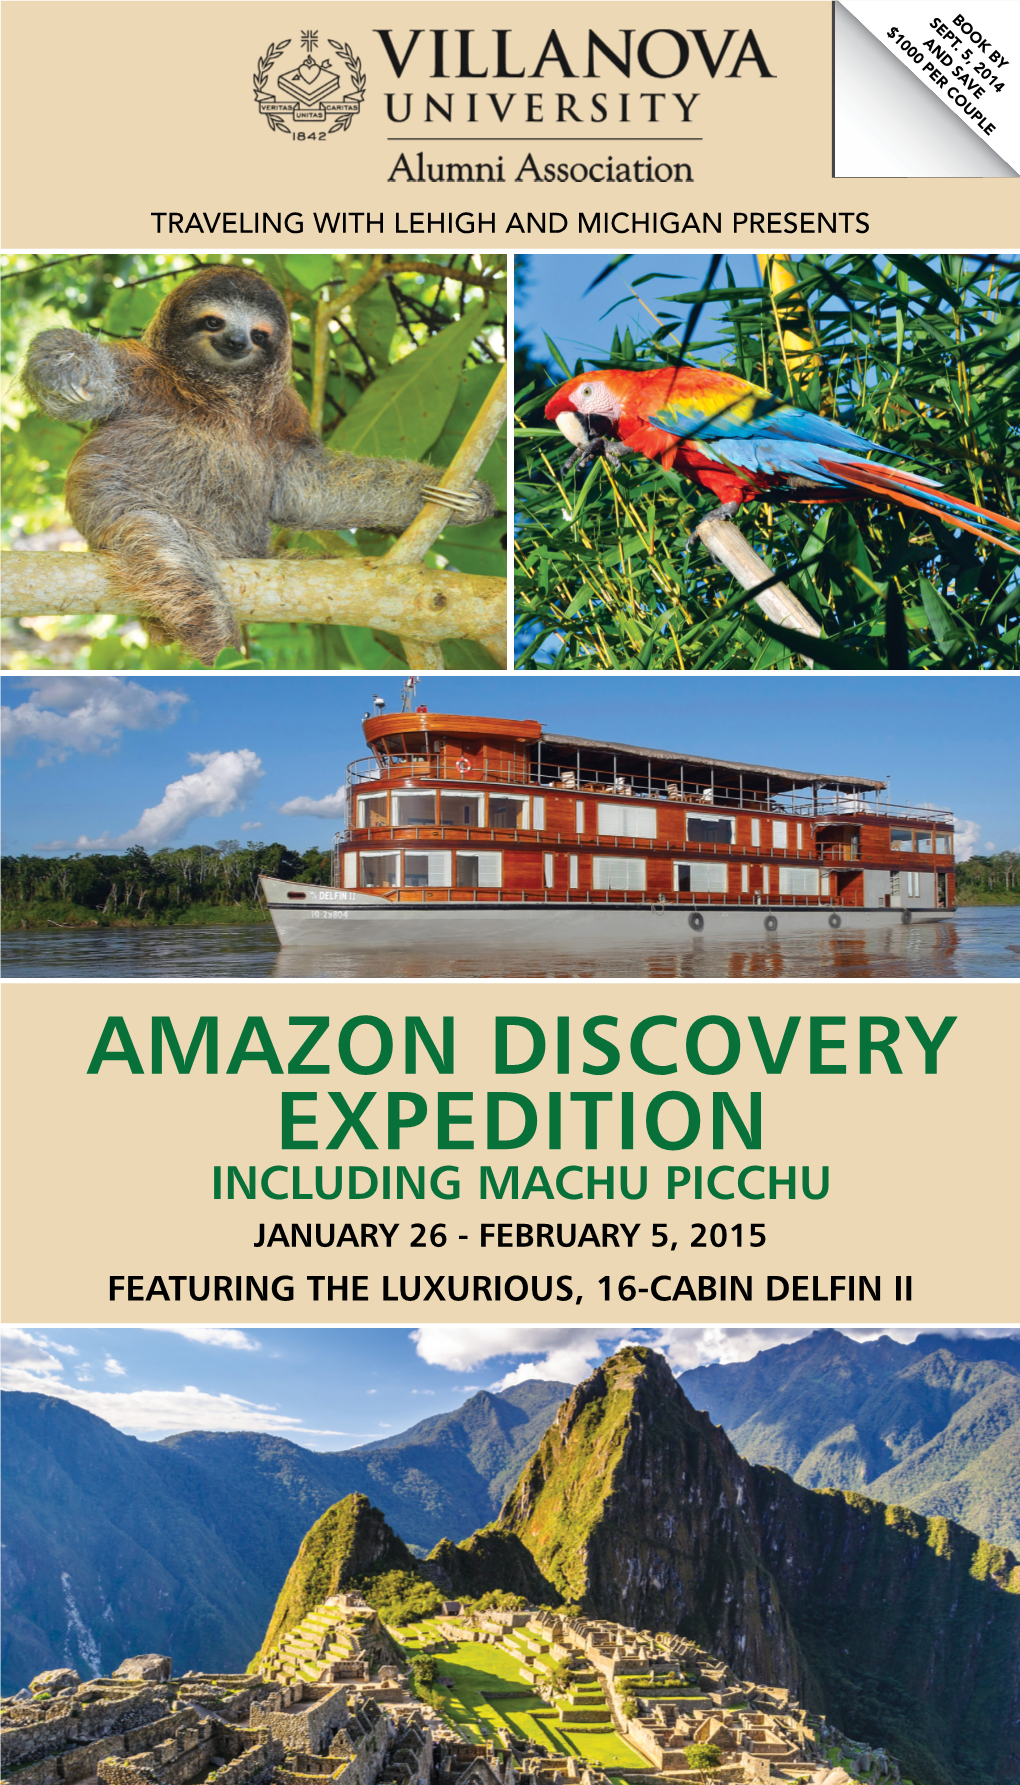 AMAZON DISCOVERY EXPEDITION INCLUDING MACHU PICCHU JANUARY 26 - FEBRUARY 5, 2015 FEATURING the LUXURIOUS, 16-CABIN DELFIN II Dear Villanova Traveler